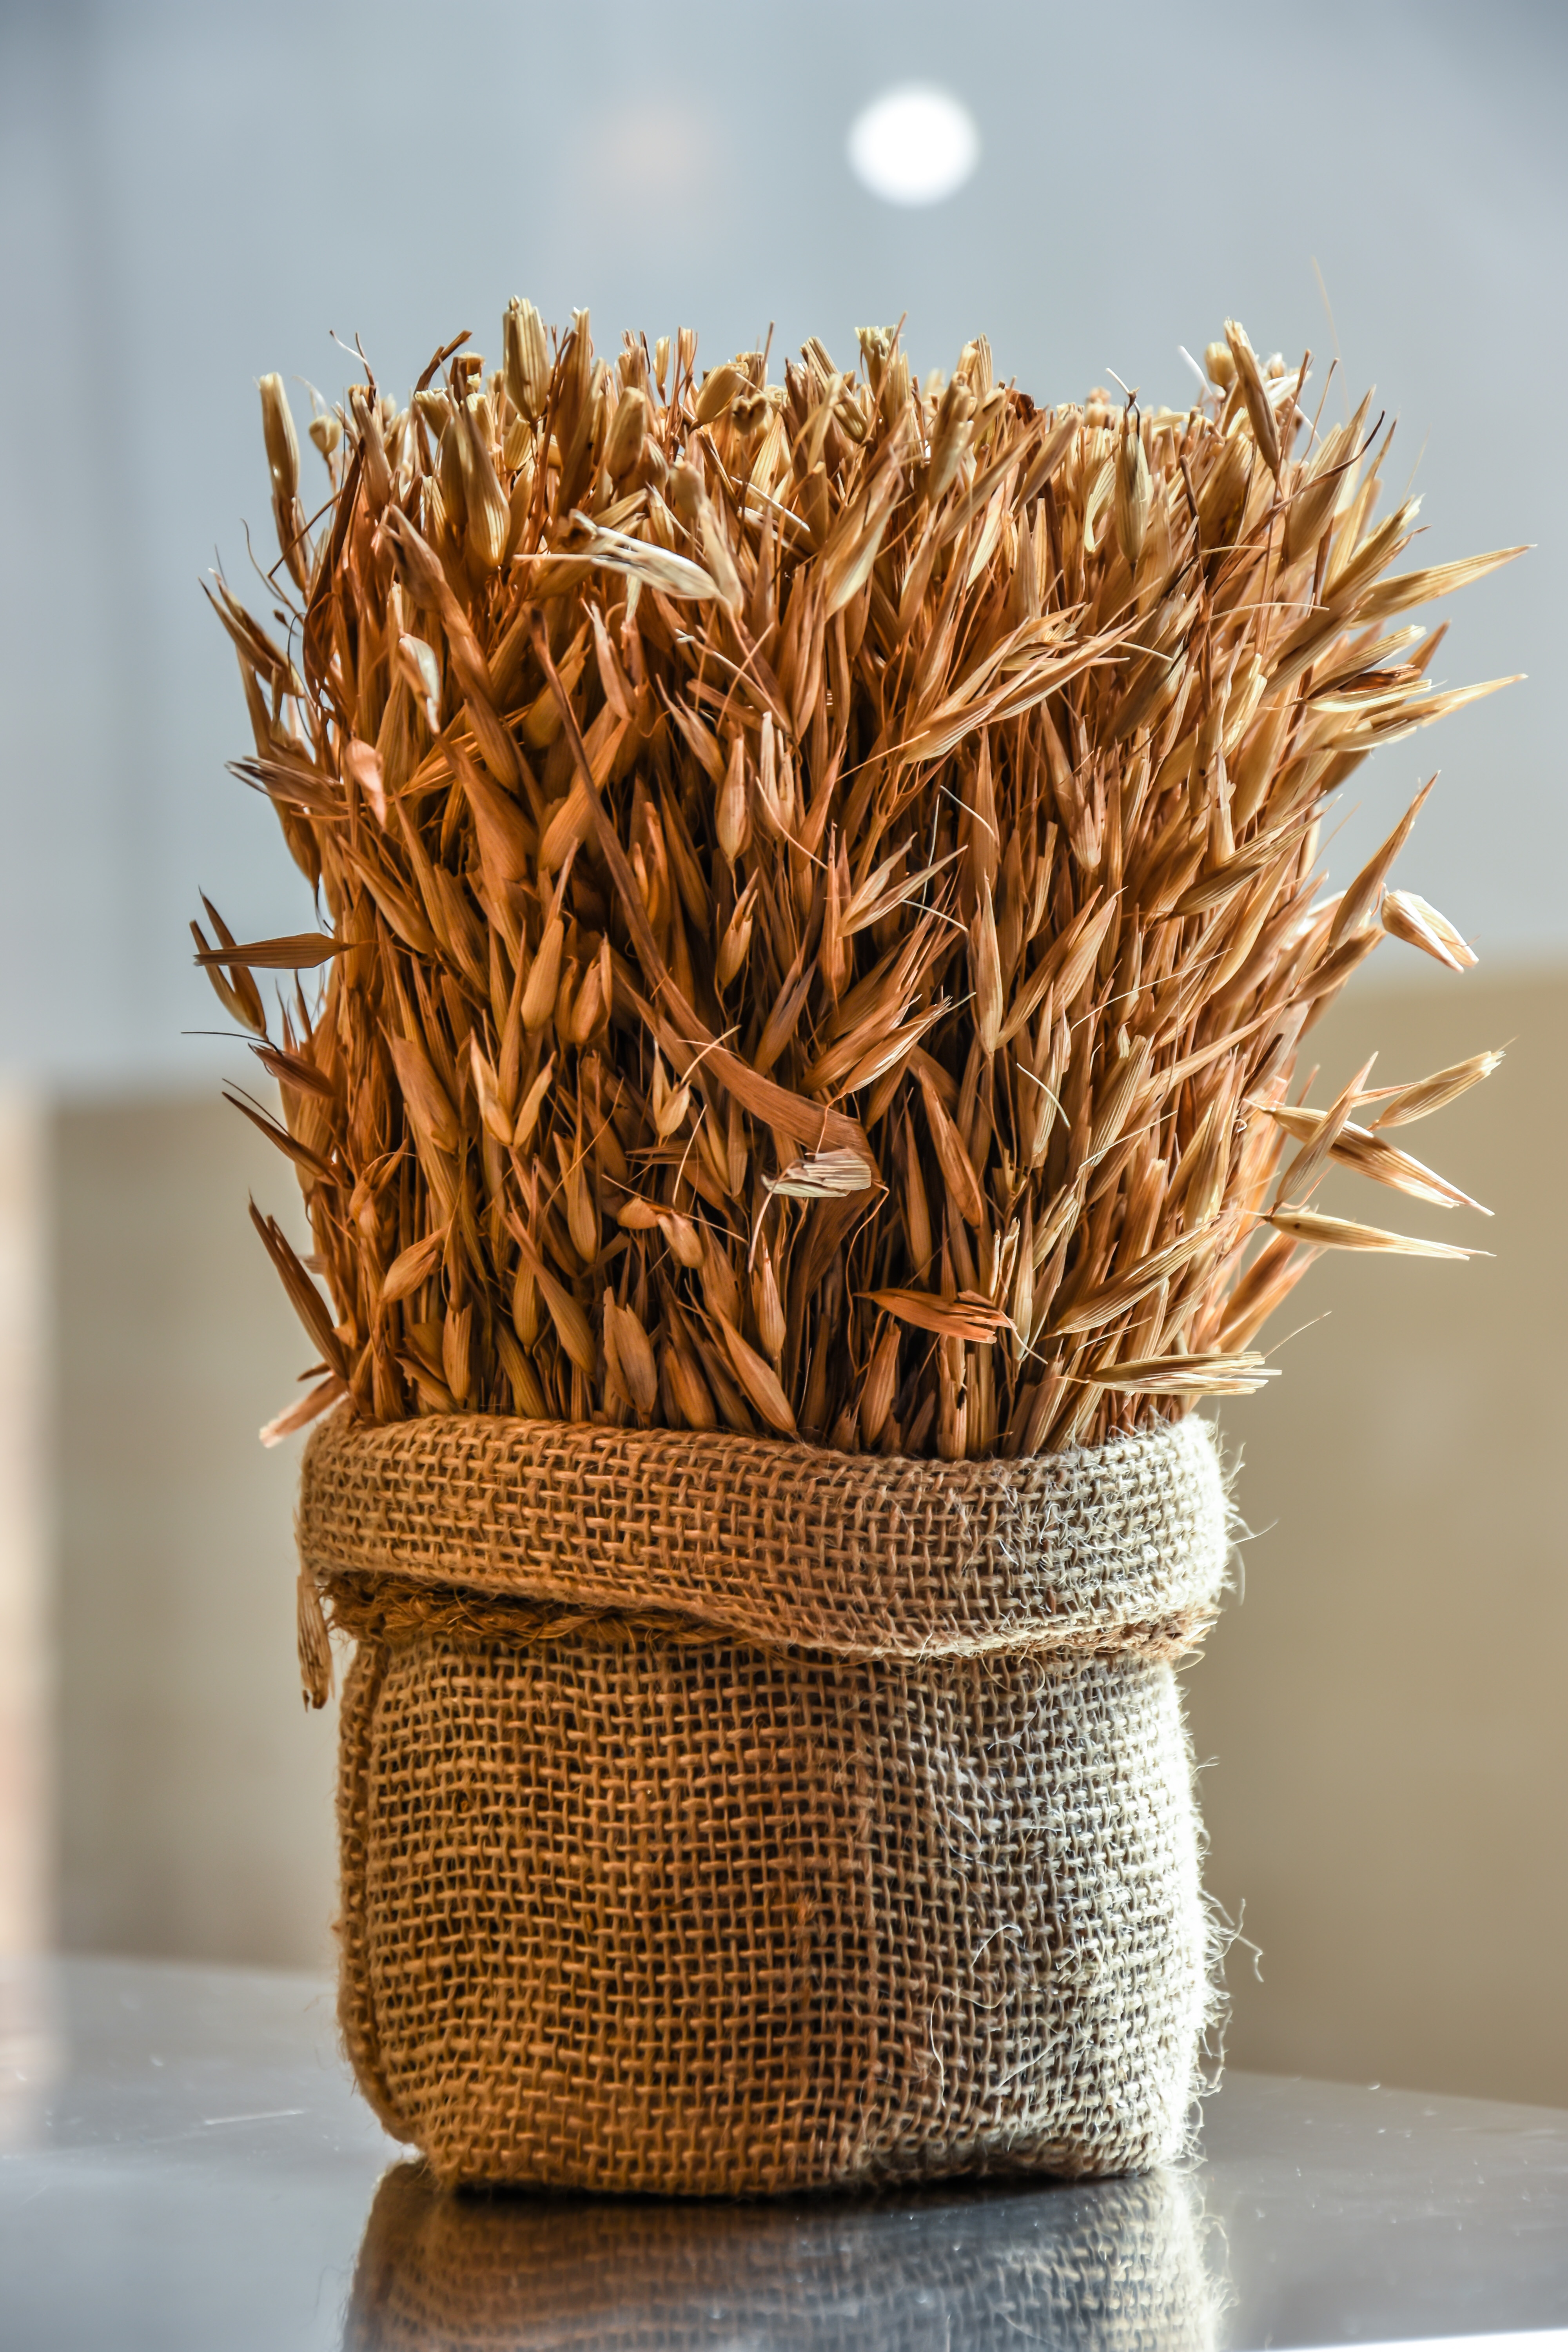 Wheat in burlap sack on table